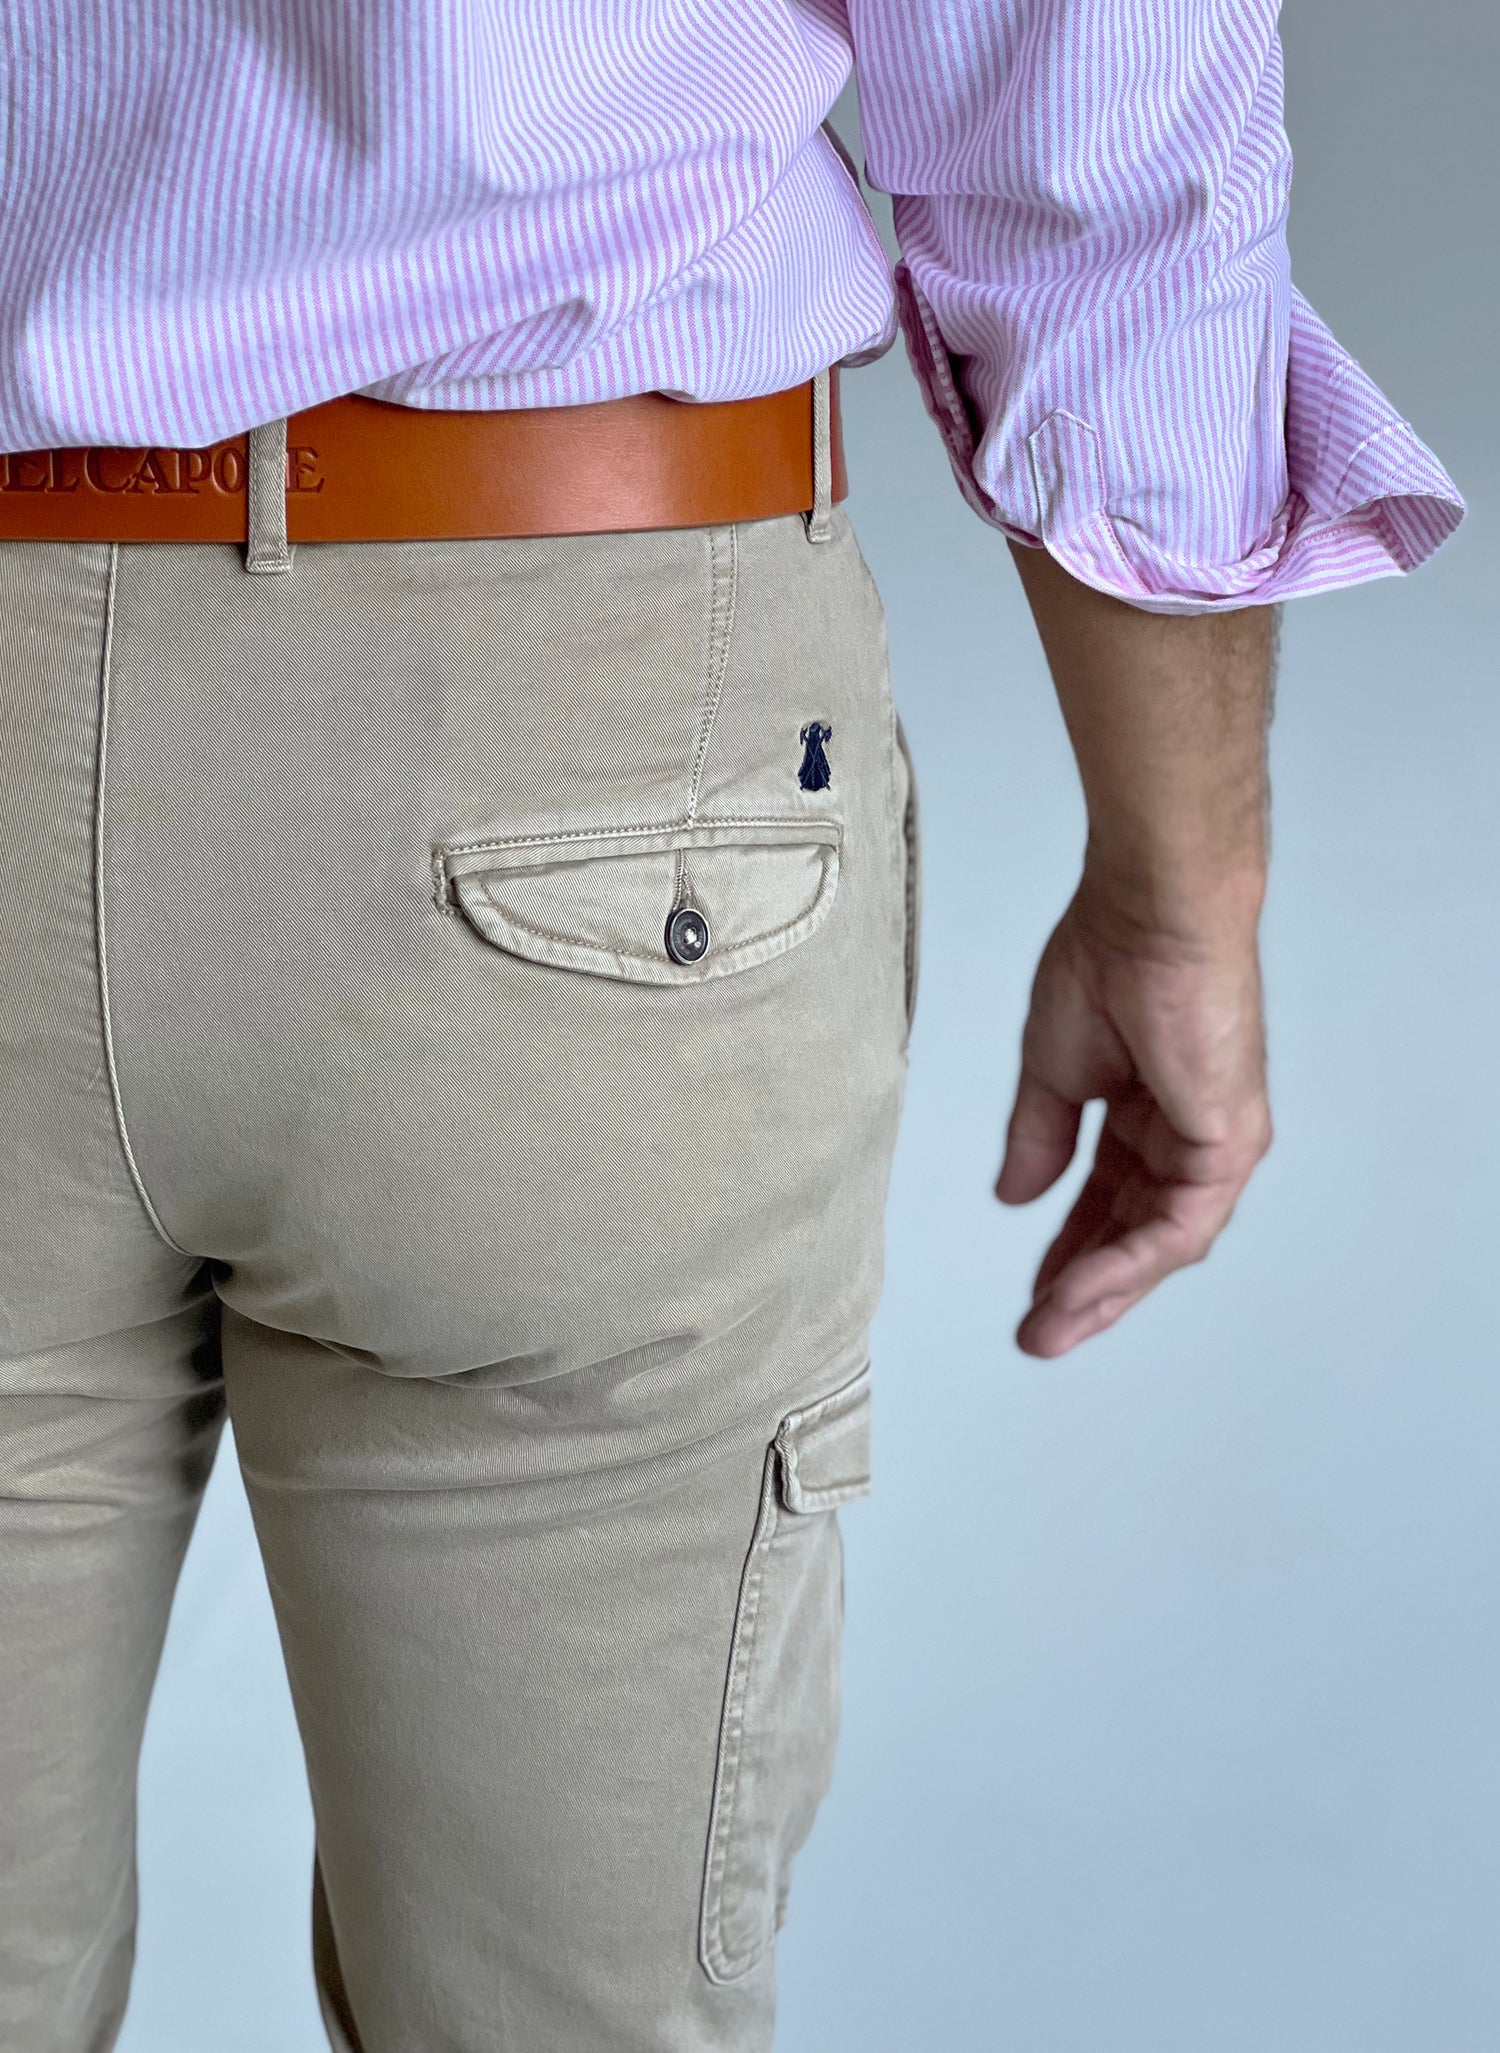 Men's Tan Cargo Pants